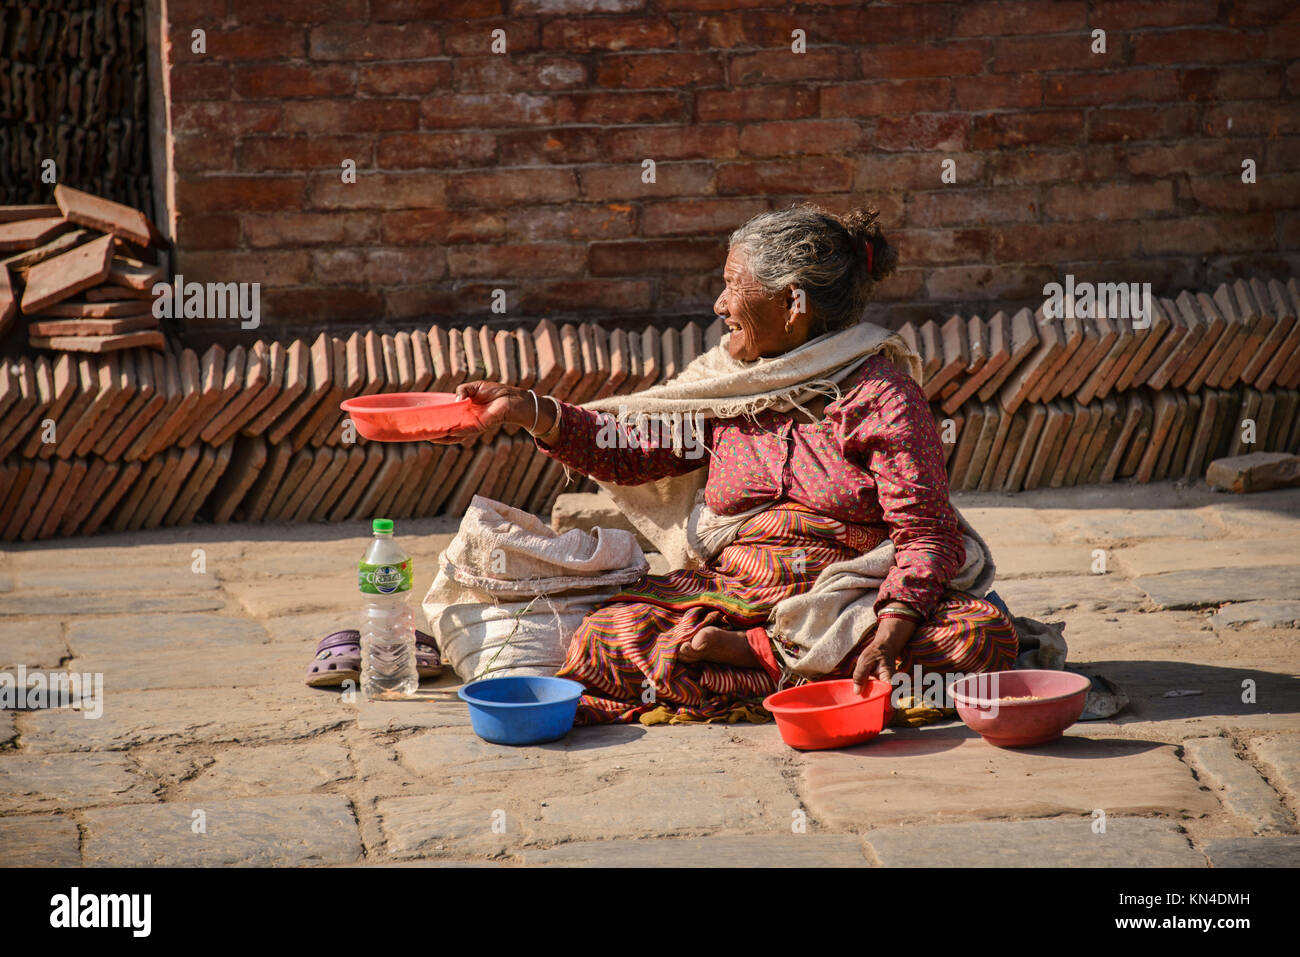 A beggar in Durbar Square, Kathmandu, Nepal Stock Photo